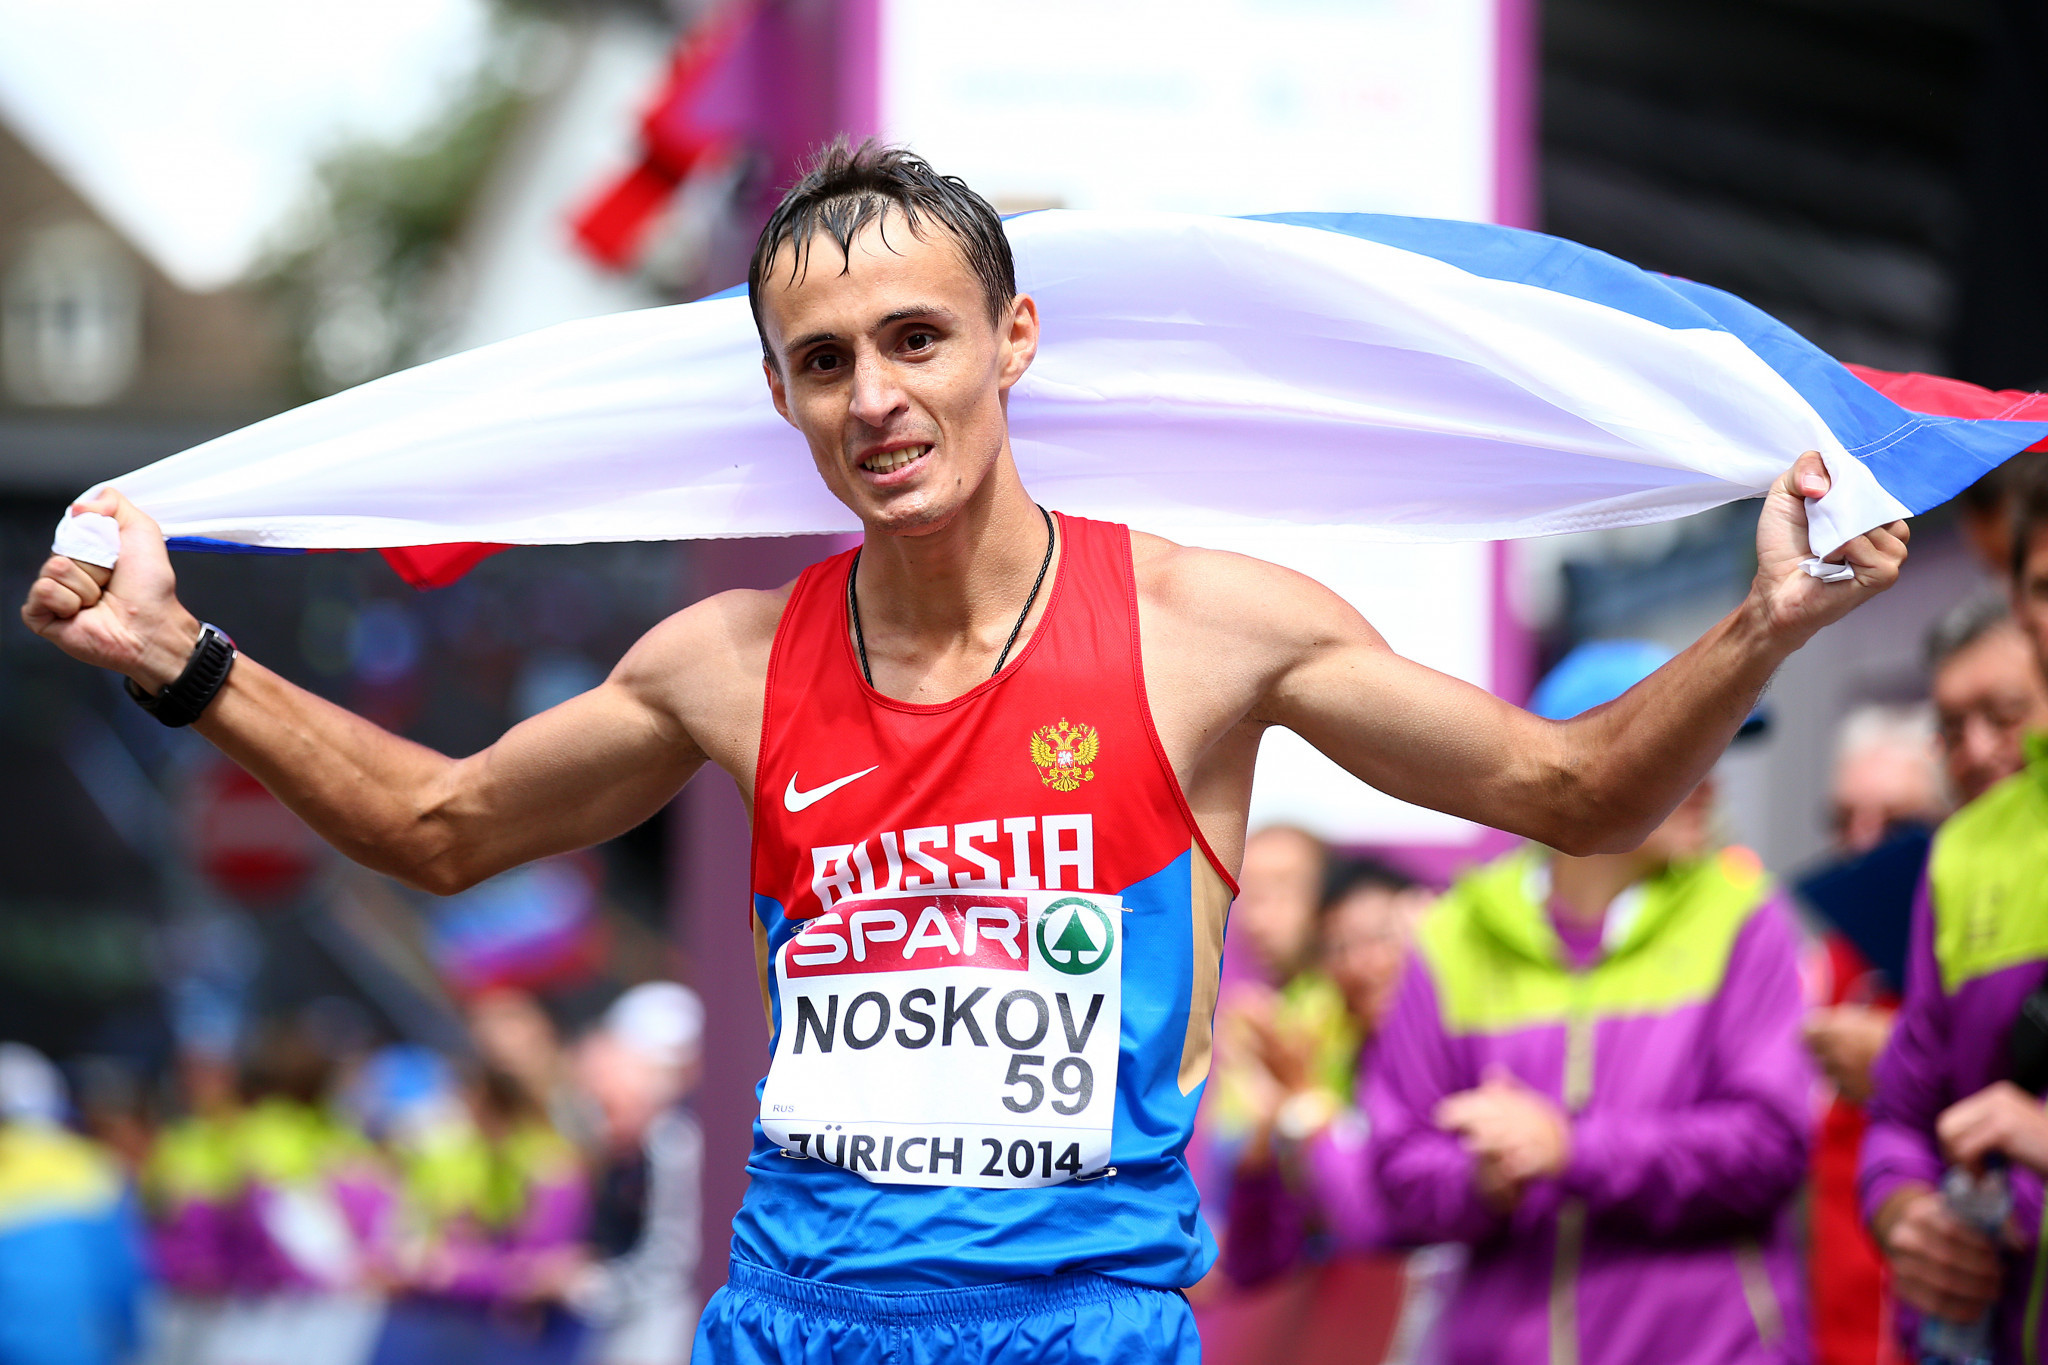 Russian racewalker Noskov stripped of 2015 European title for doping